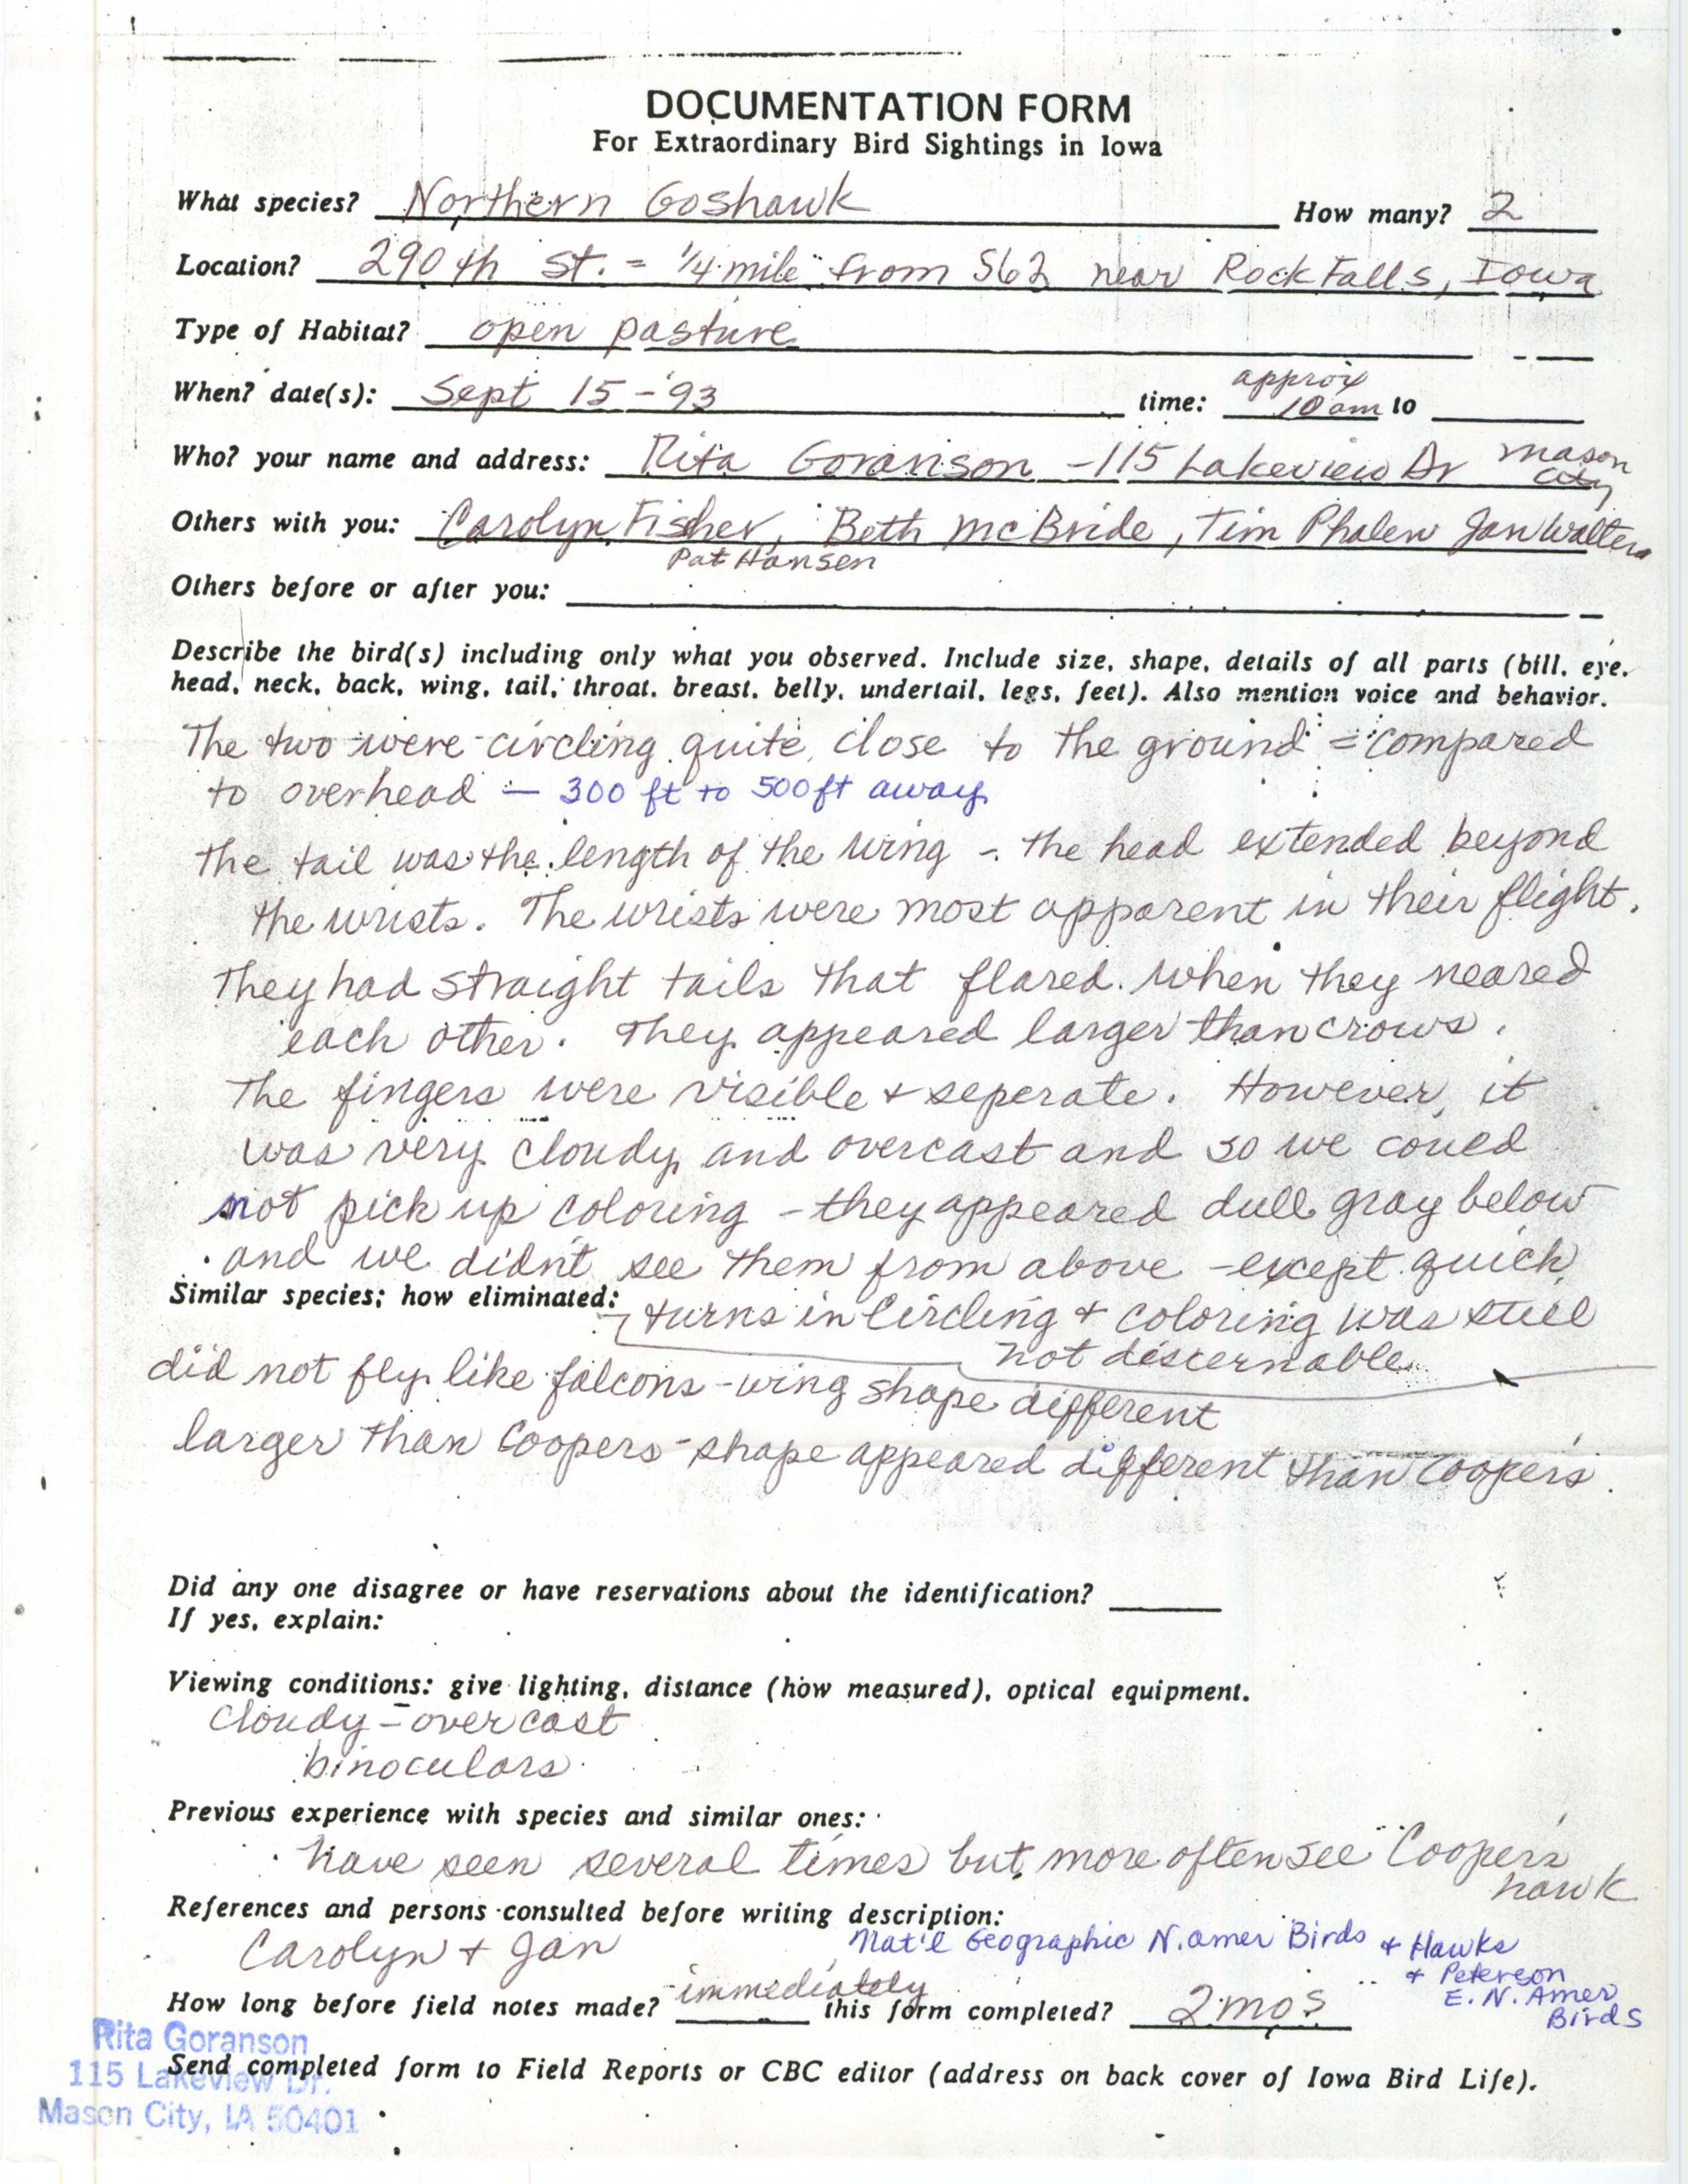 Rare bird documentation form for Northern Goshawk at Rock Falls, 1993